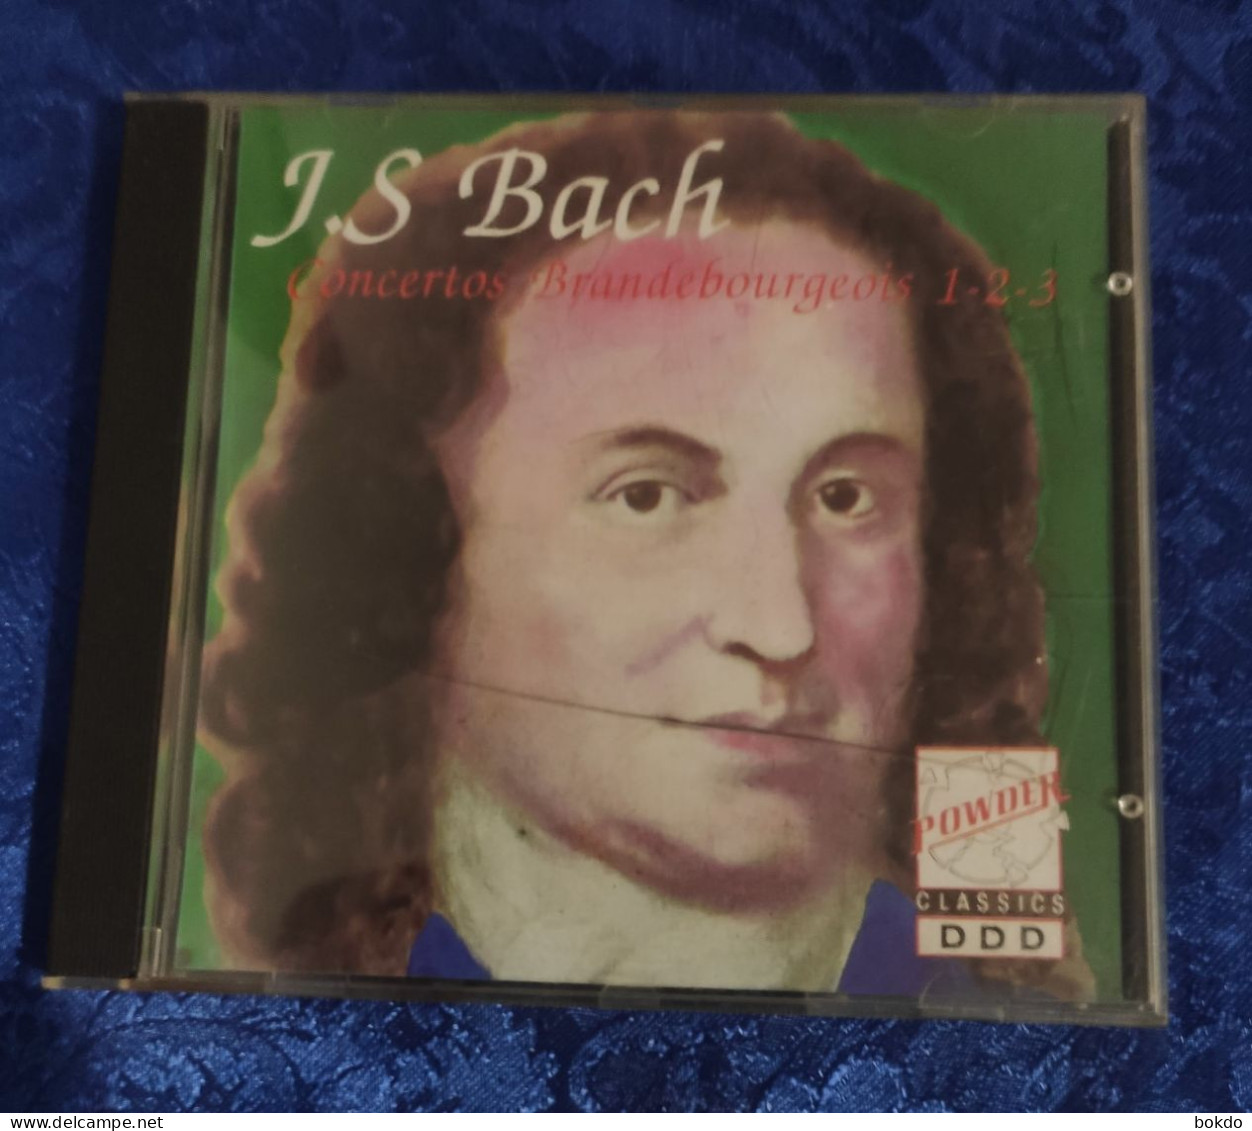 J.S. BACH - Concertos - Klassik